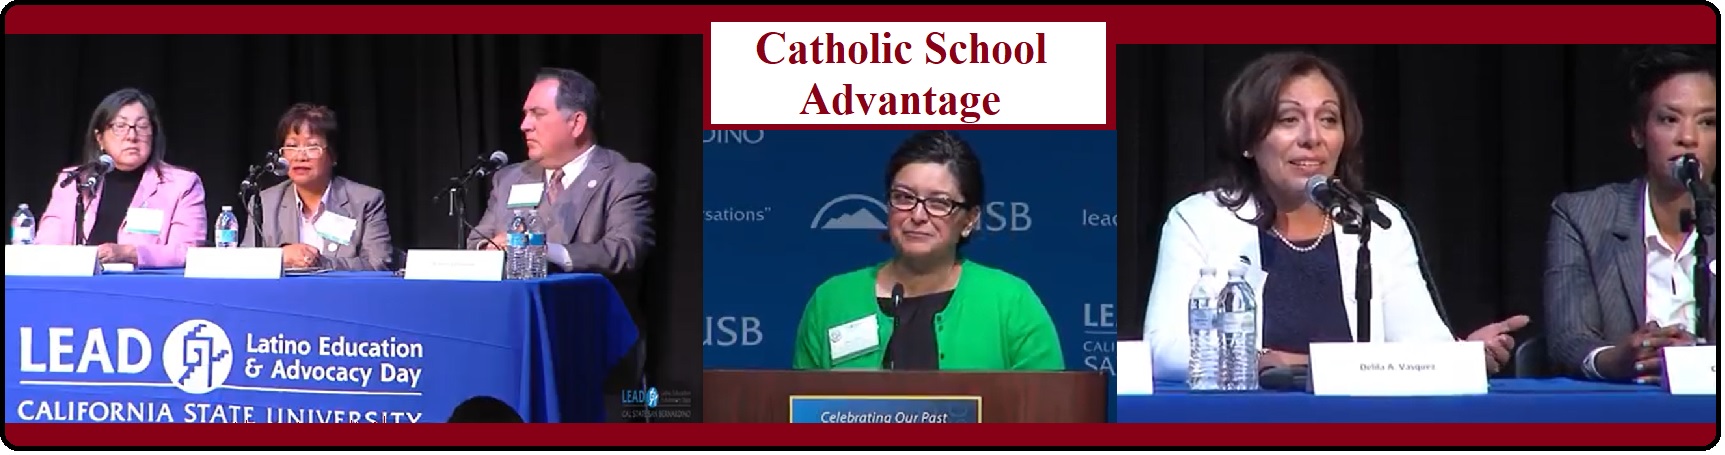 Panel: “Catholic School Advantage: Latino and African American Student Achievement” Season 7 (2016)